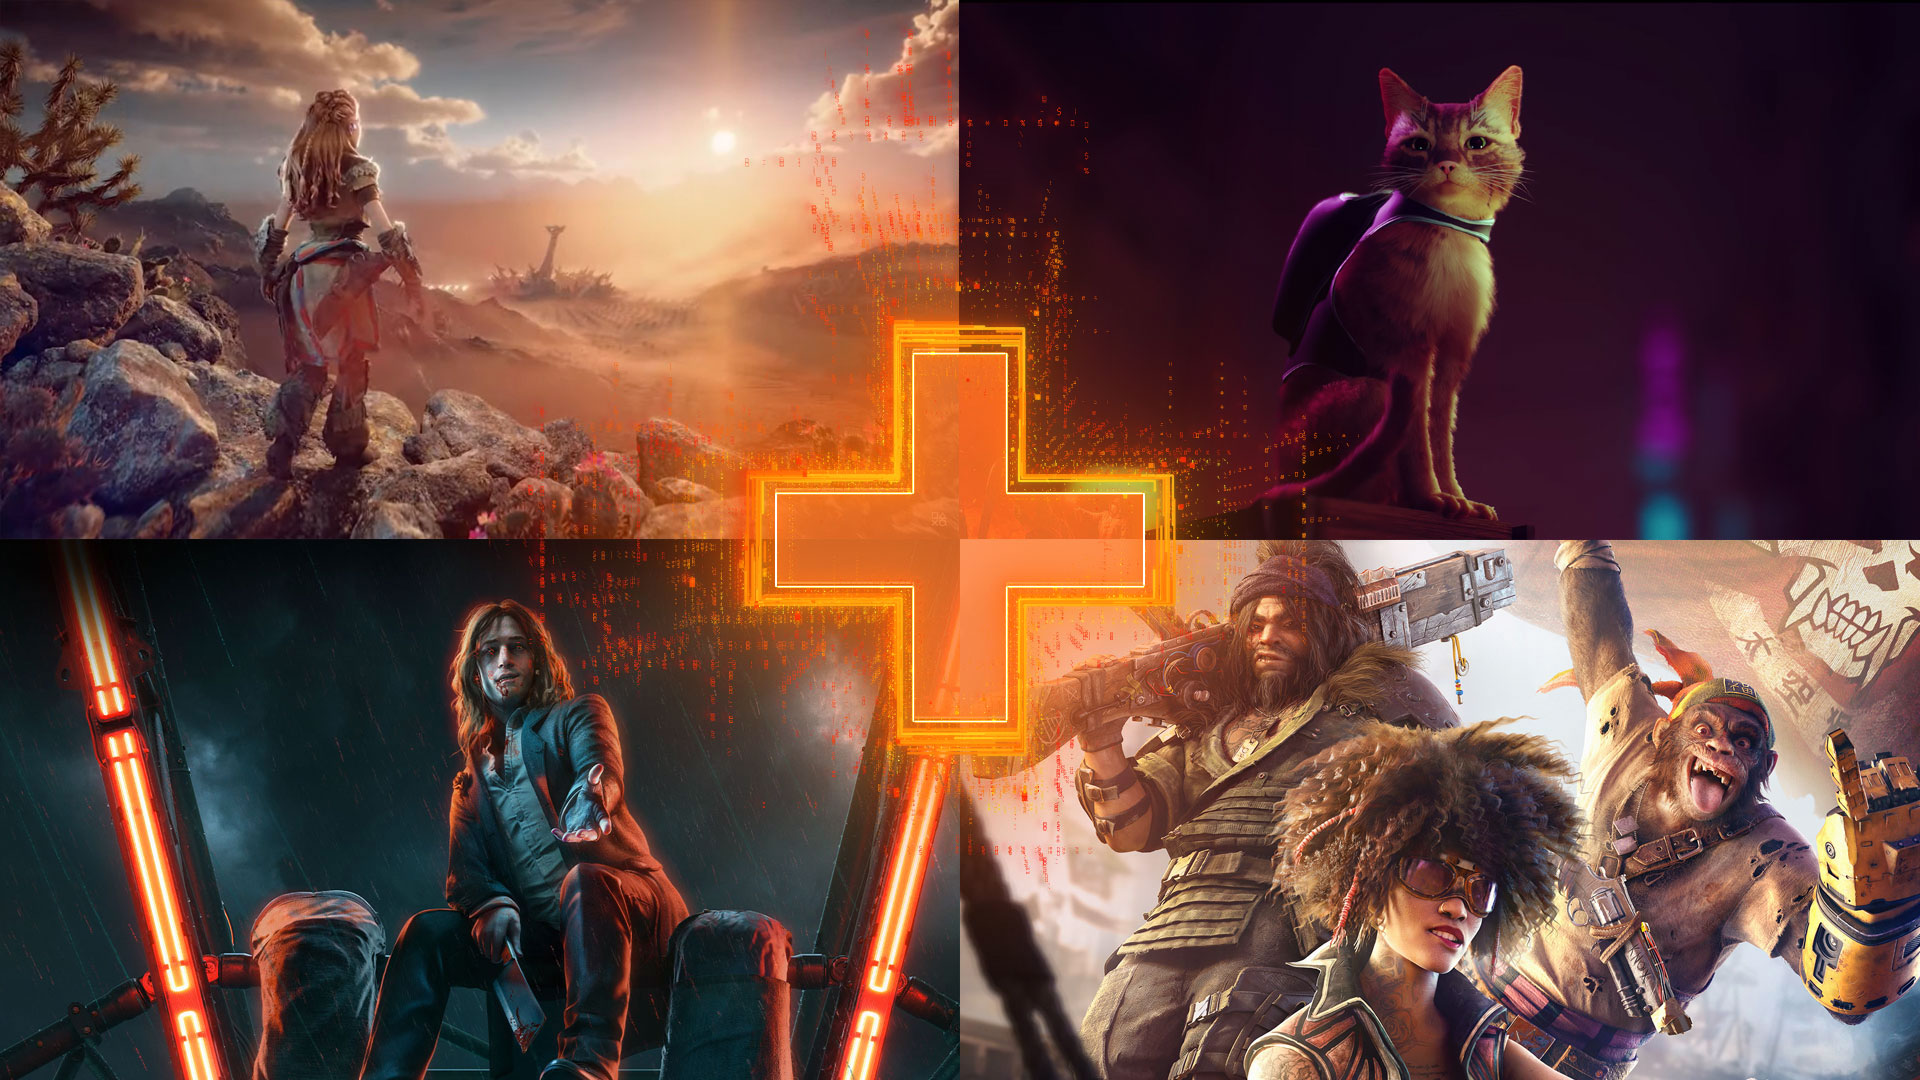 chrysant Riet bedriegen Upcoming PS4 games for 2022 and beyond | GamesRadar+